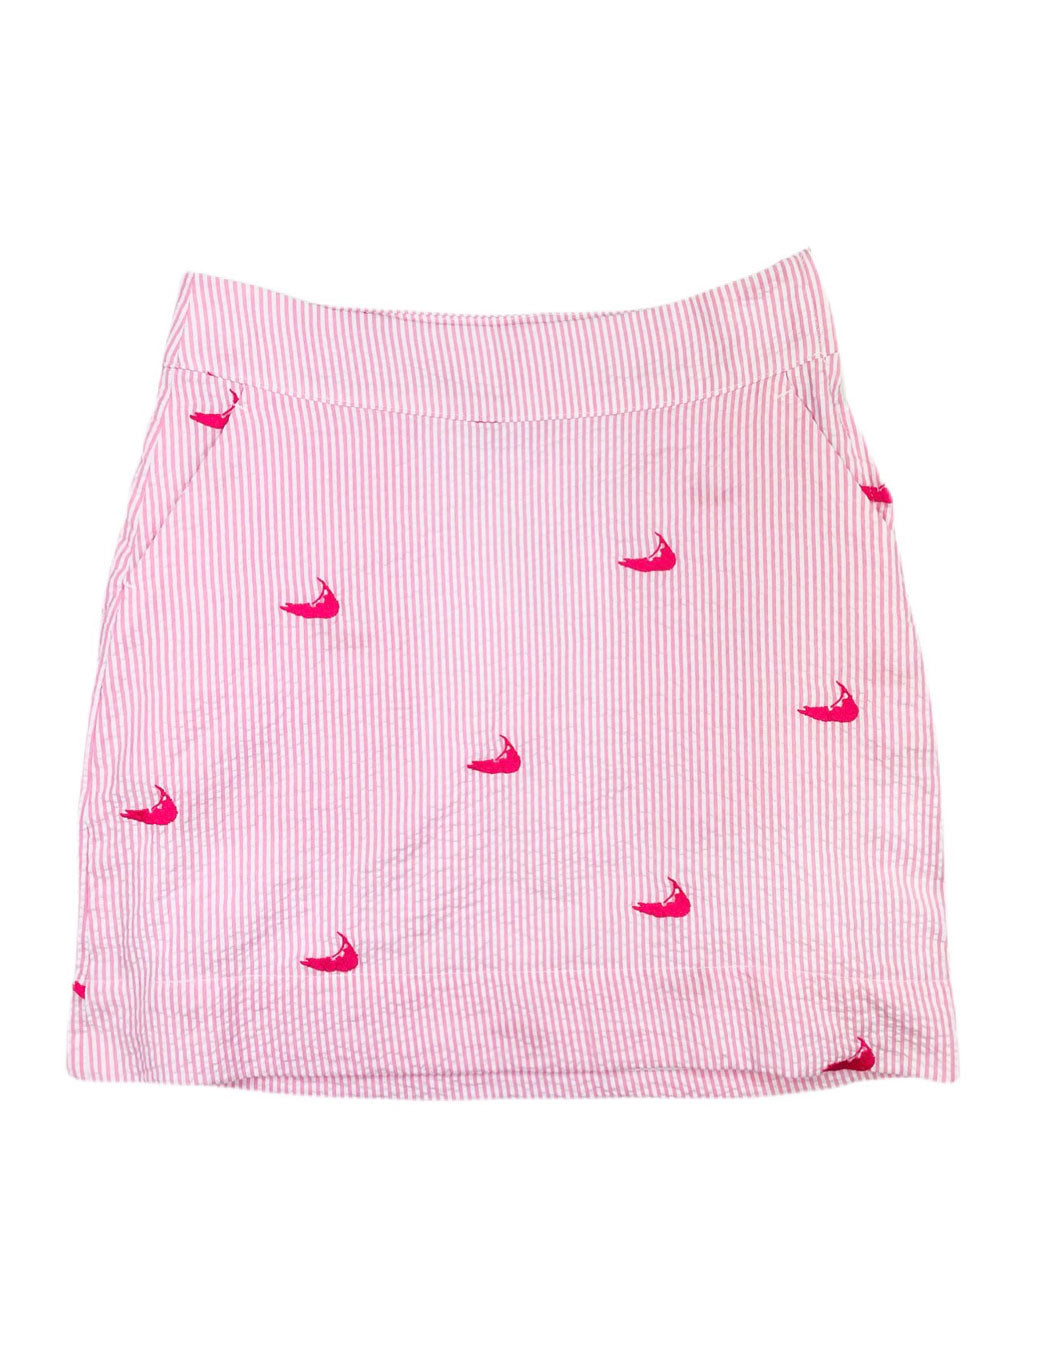 Pink Seersucker Women's Skirt with Pink Embroidered Nantuckets